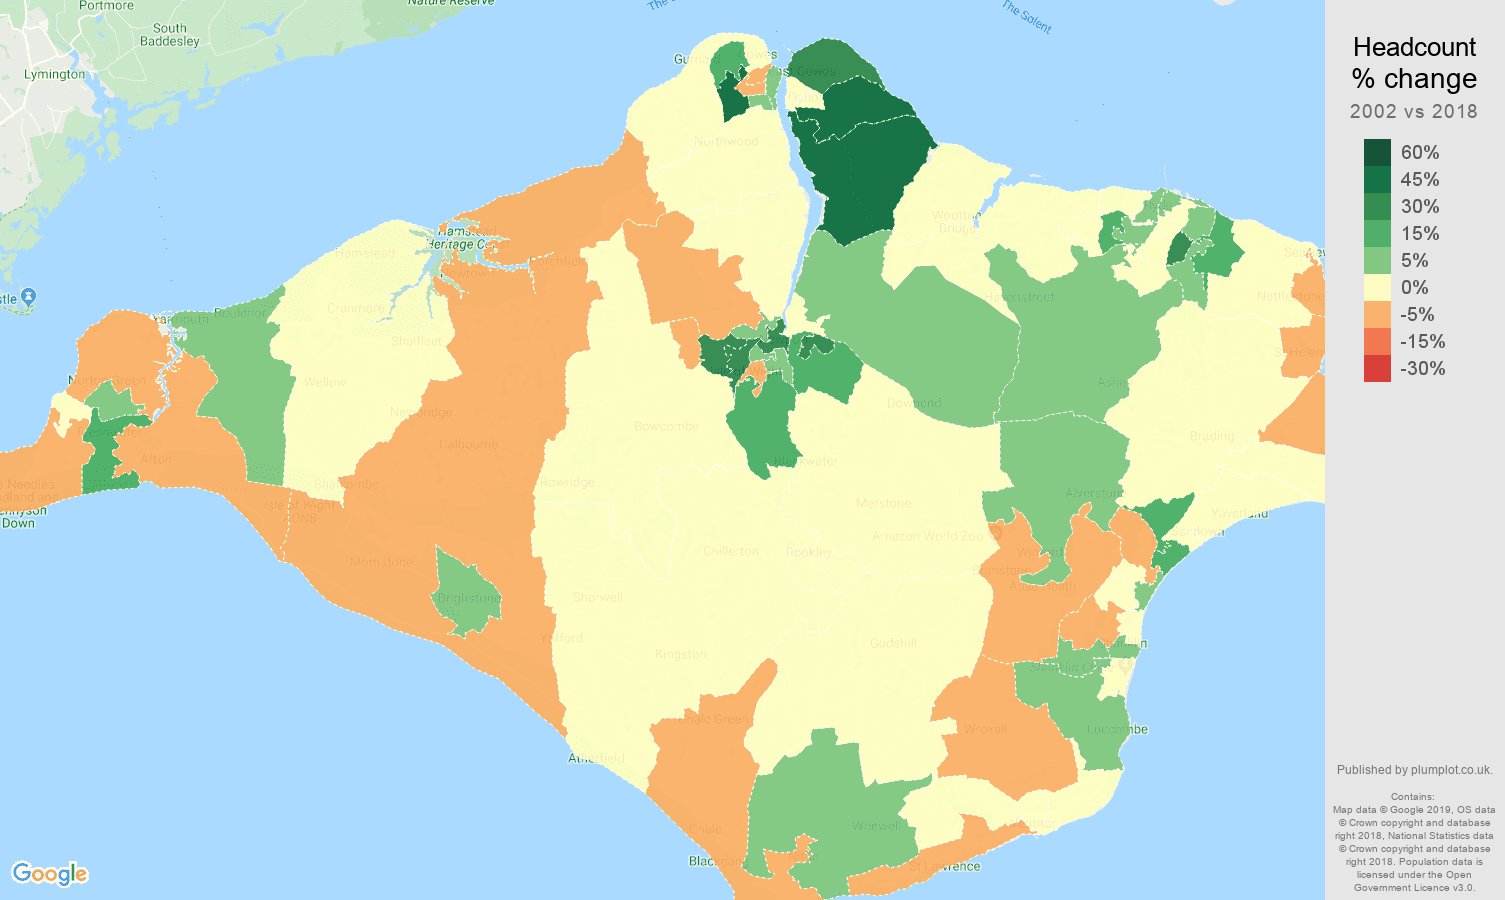 Isle of Wight headcount change map